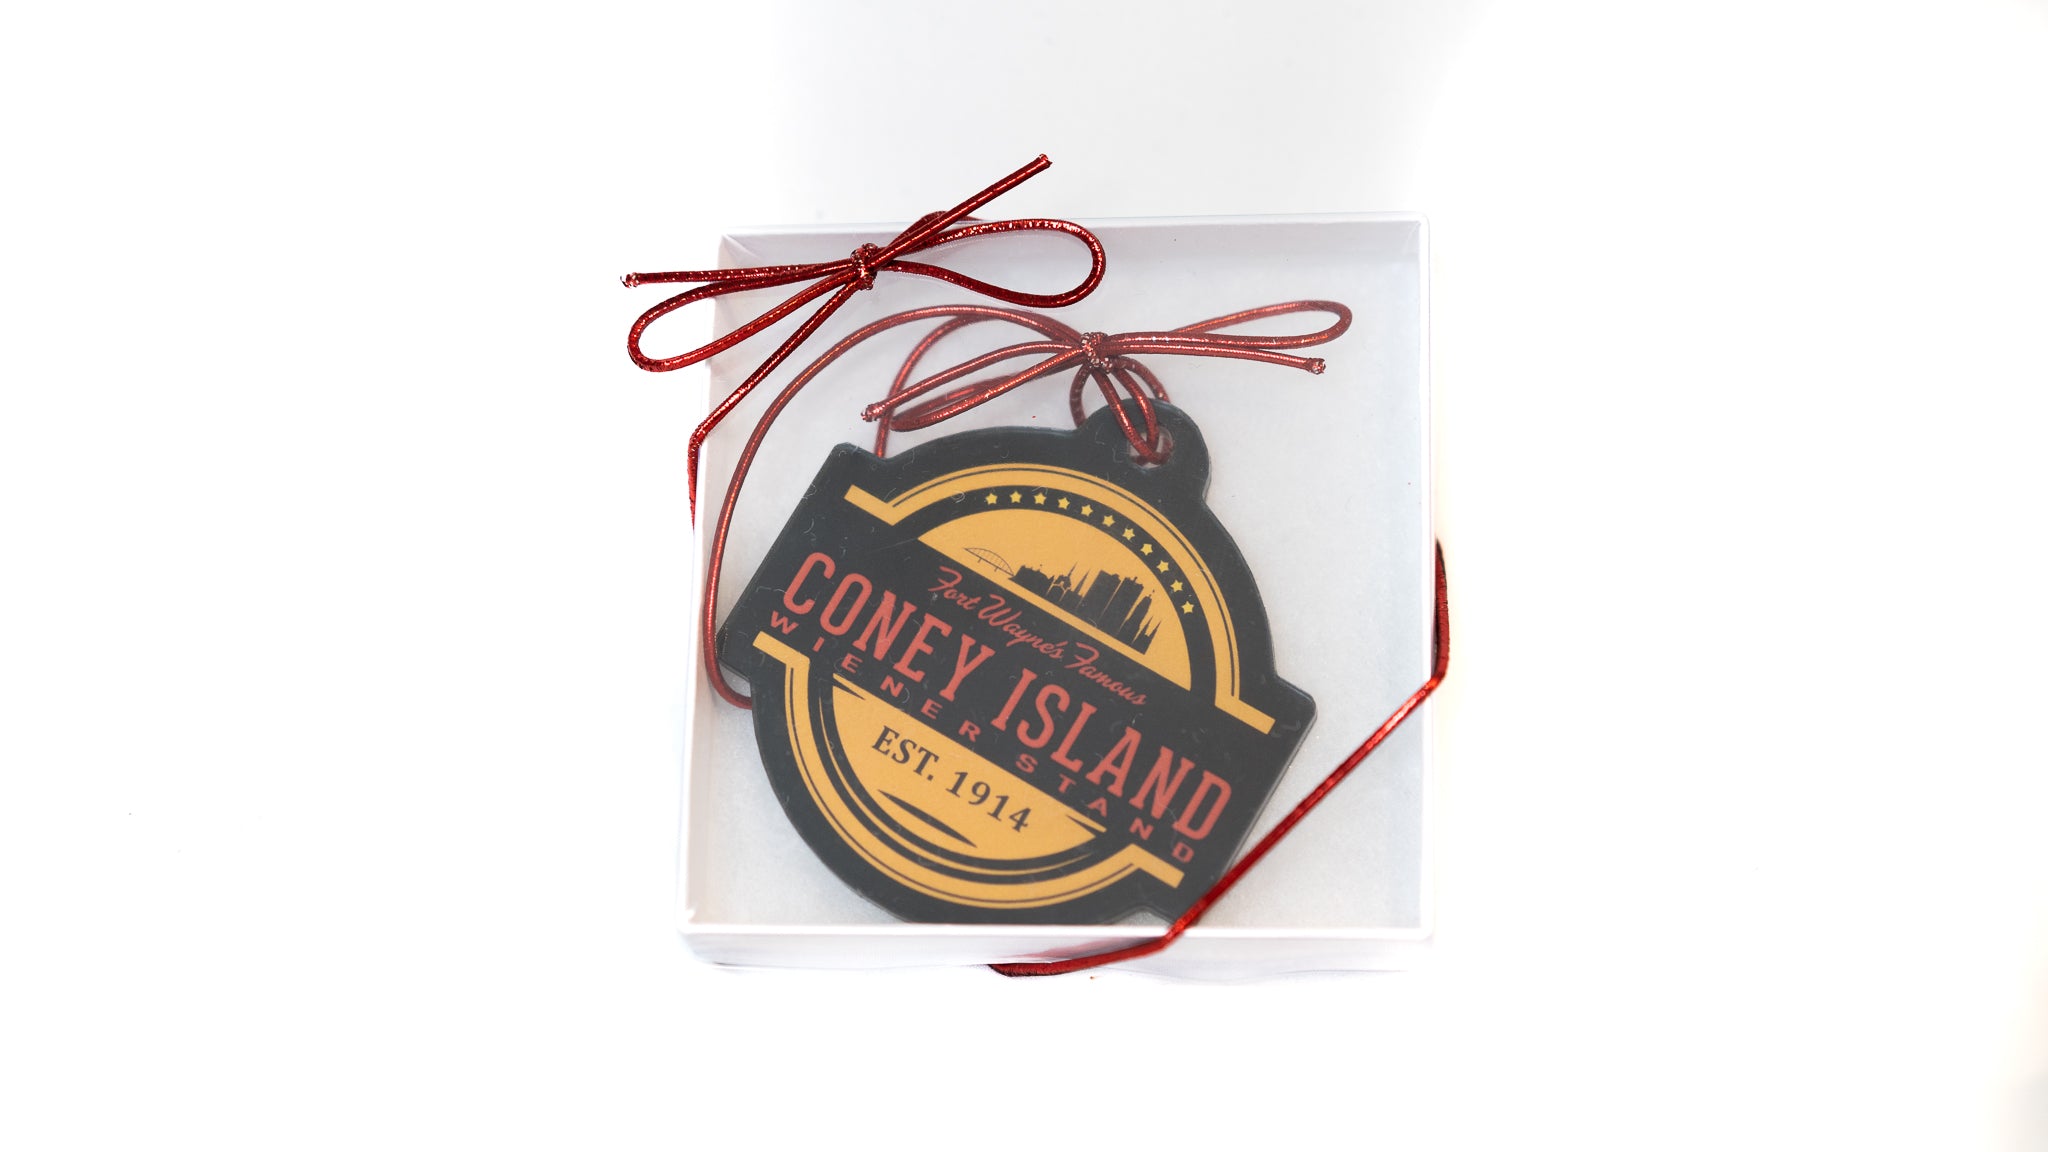 Coney Island Christmas Ornament - Logo w/ Ft. Wayne Skyline